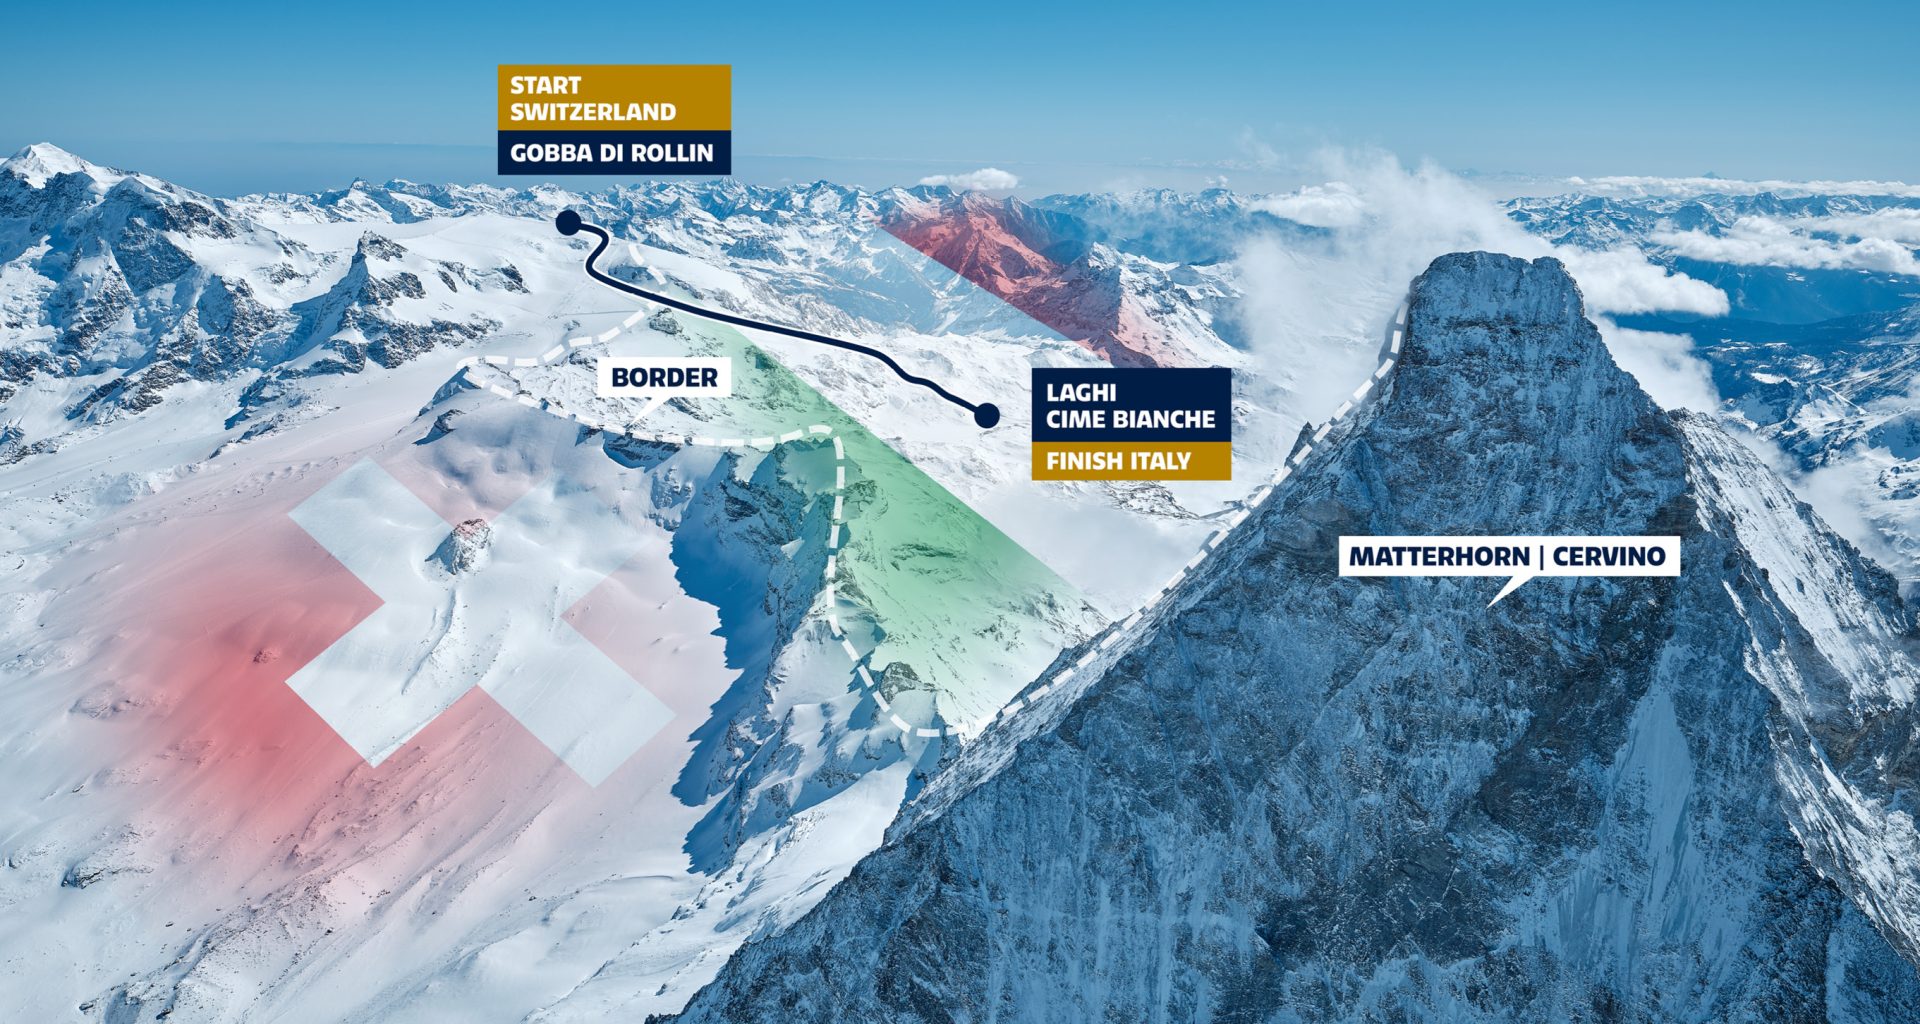 Matterhorn Cervino Speed Opening